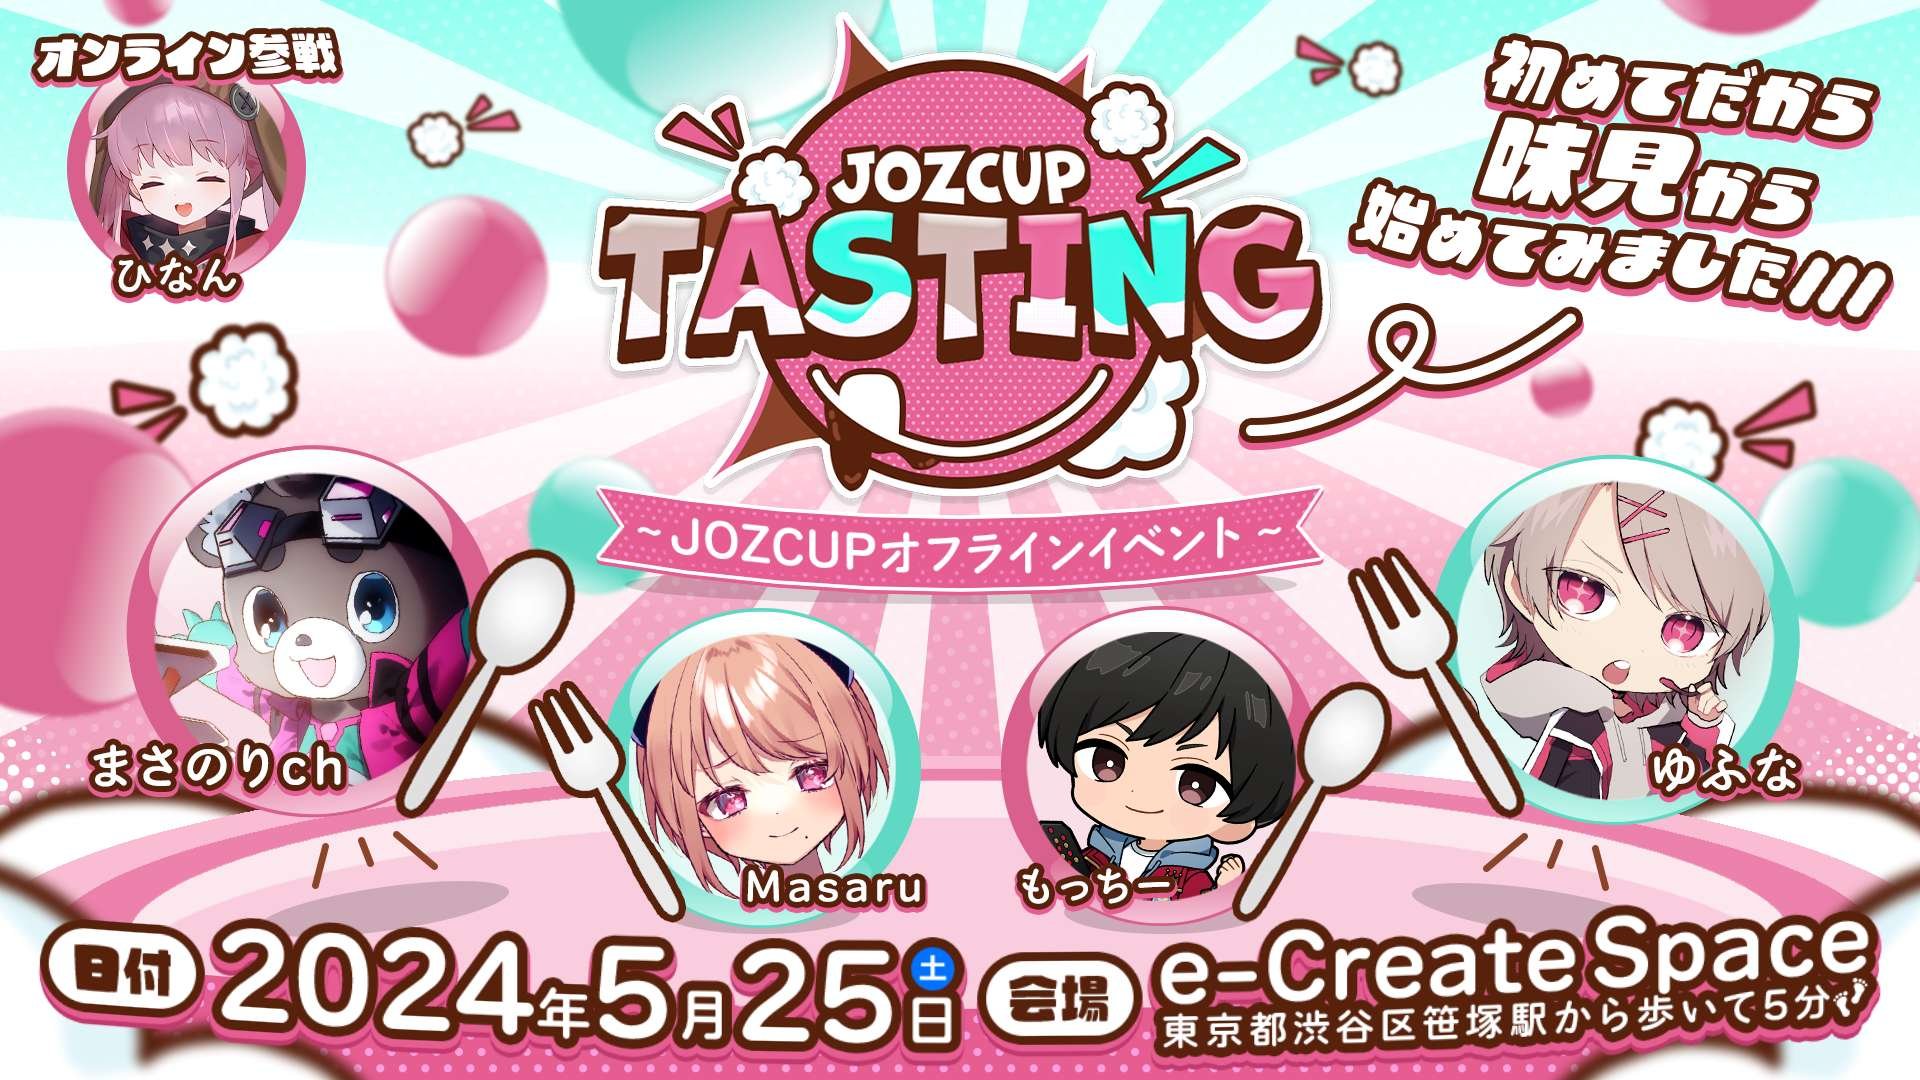 【大会情報】JOZ CUP TASTING【2024年5月25日】